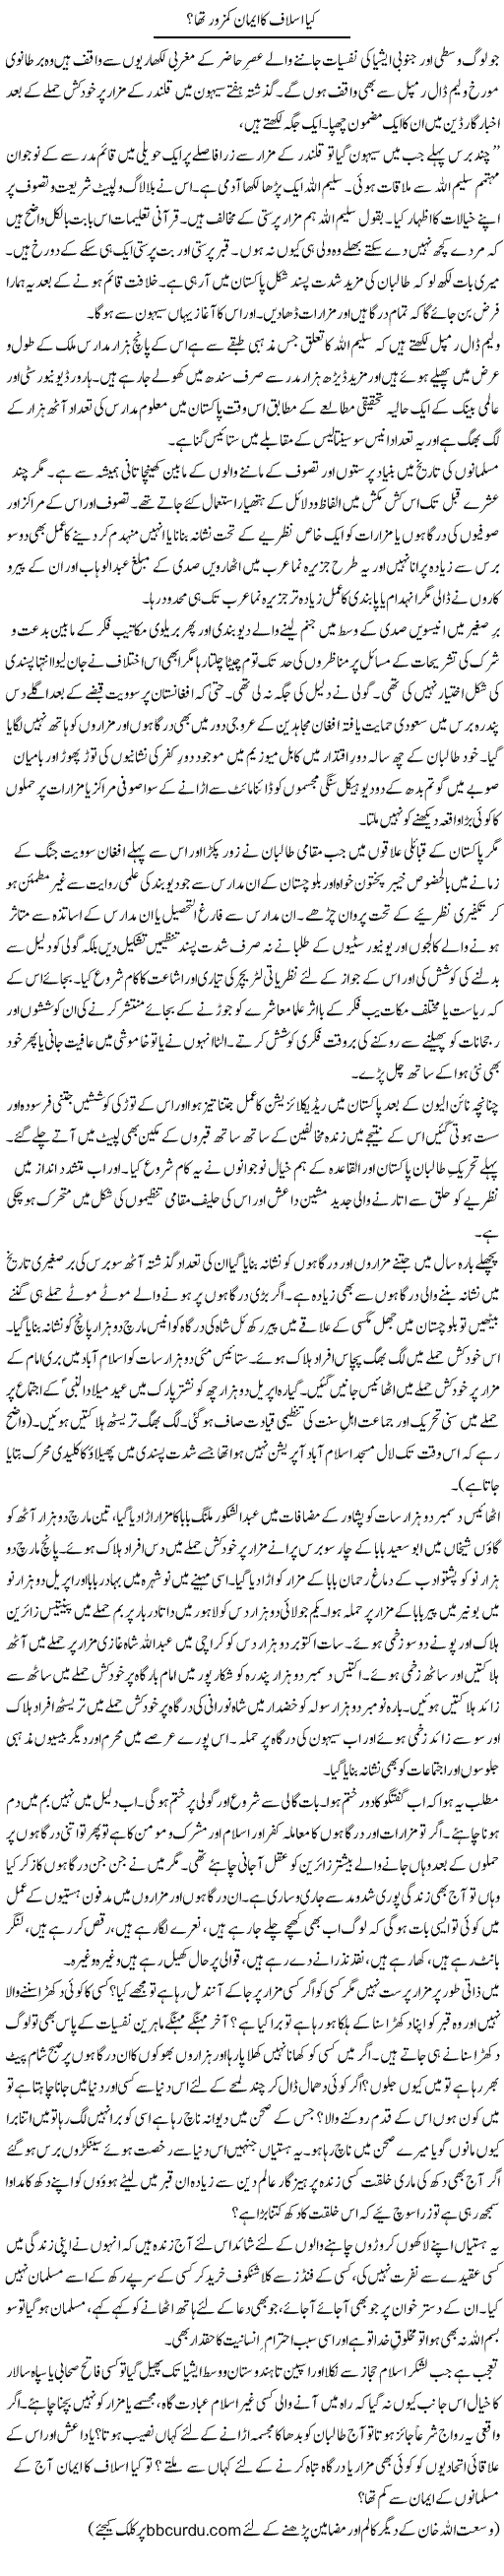 Kya Aslaaf Ka Imaan Kamzor Tha? | Wusat Ullah Khan | Daily Urdu Columns